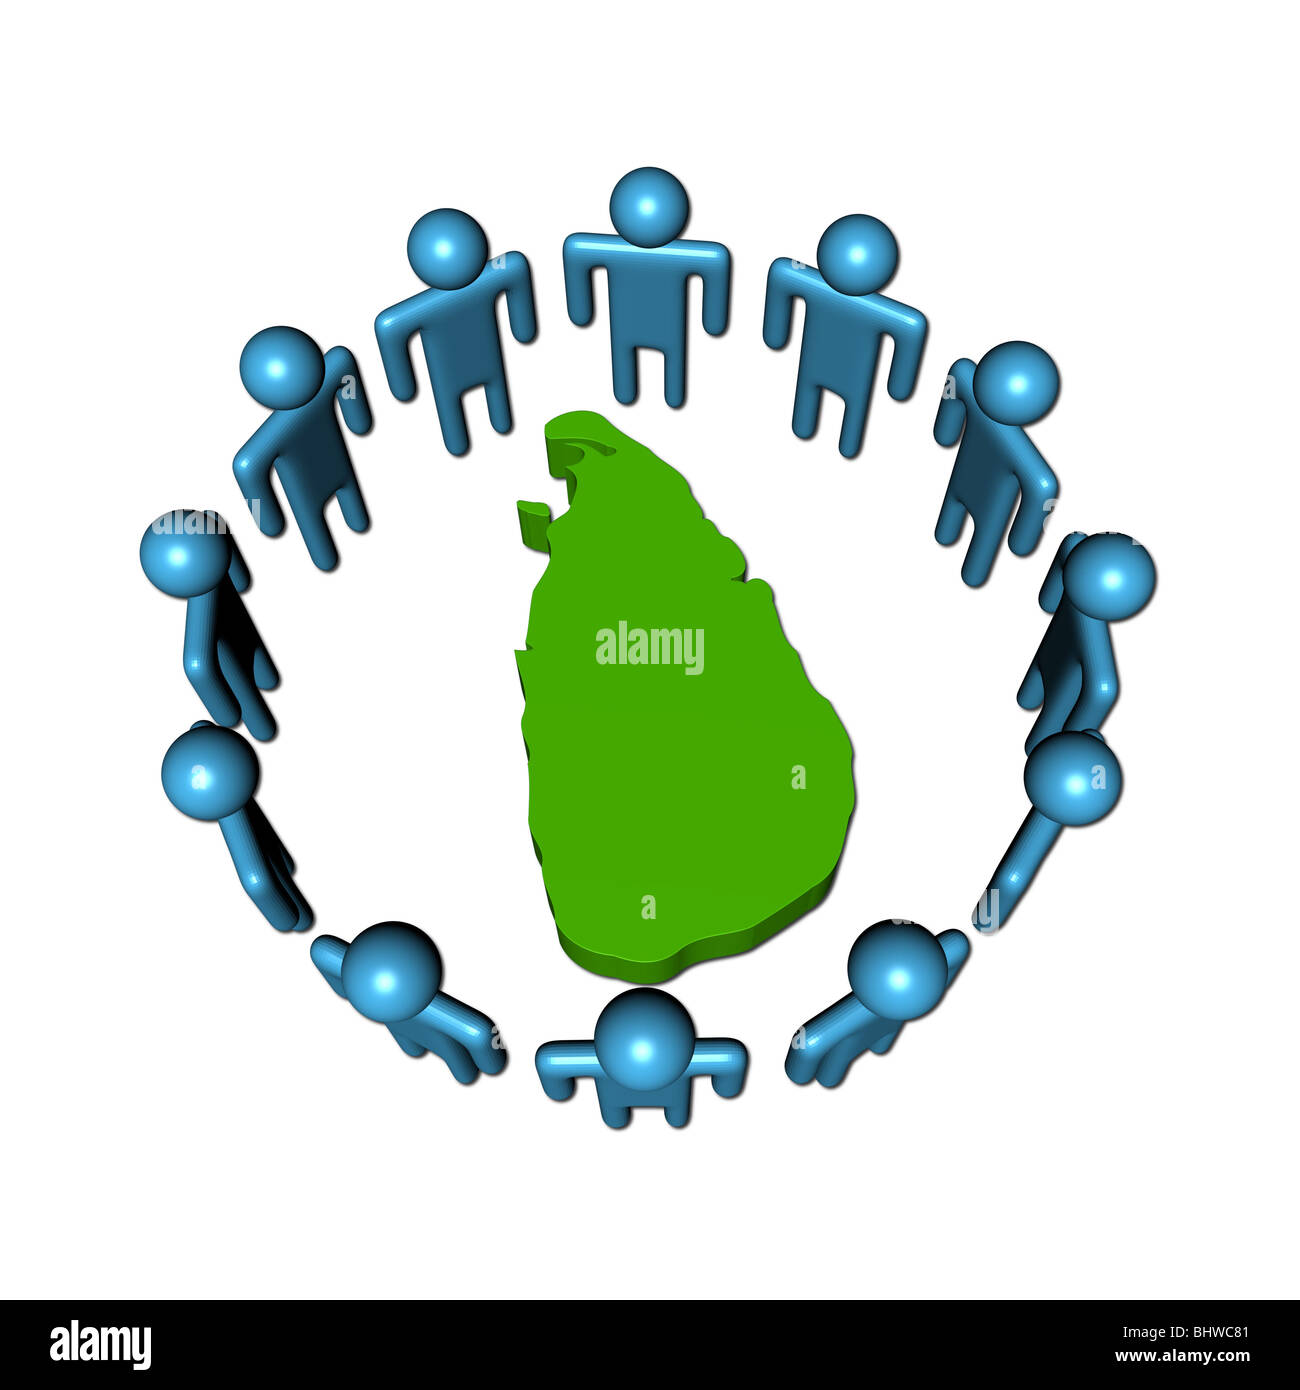 Circle of abstract people around Sri Lanka map illustration Stock Photo